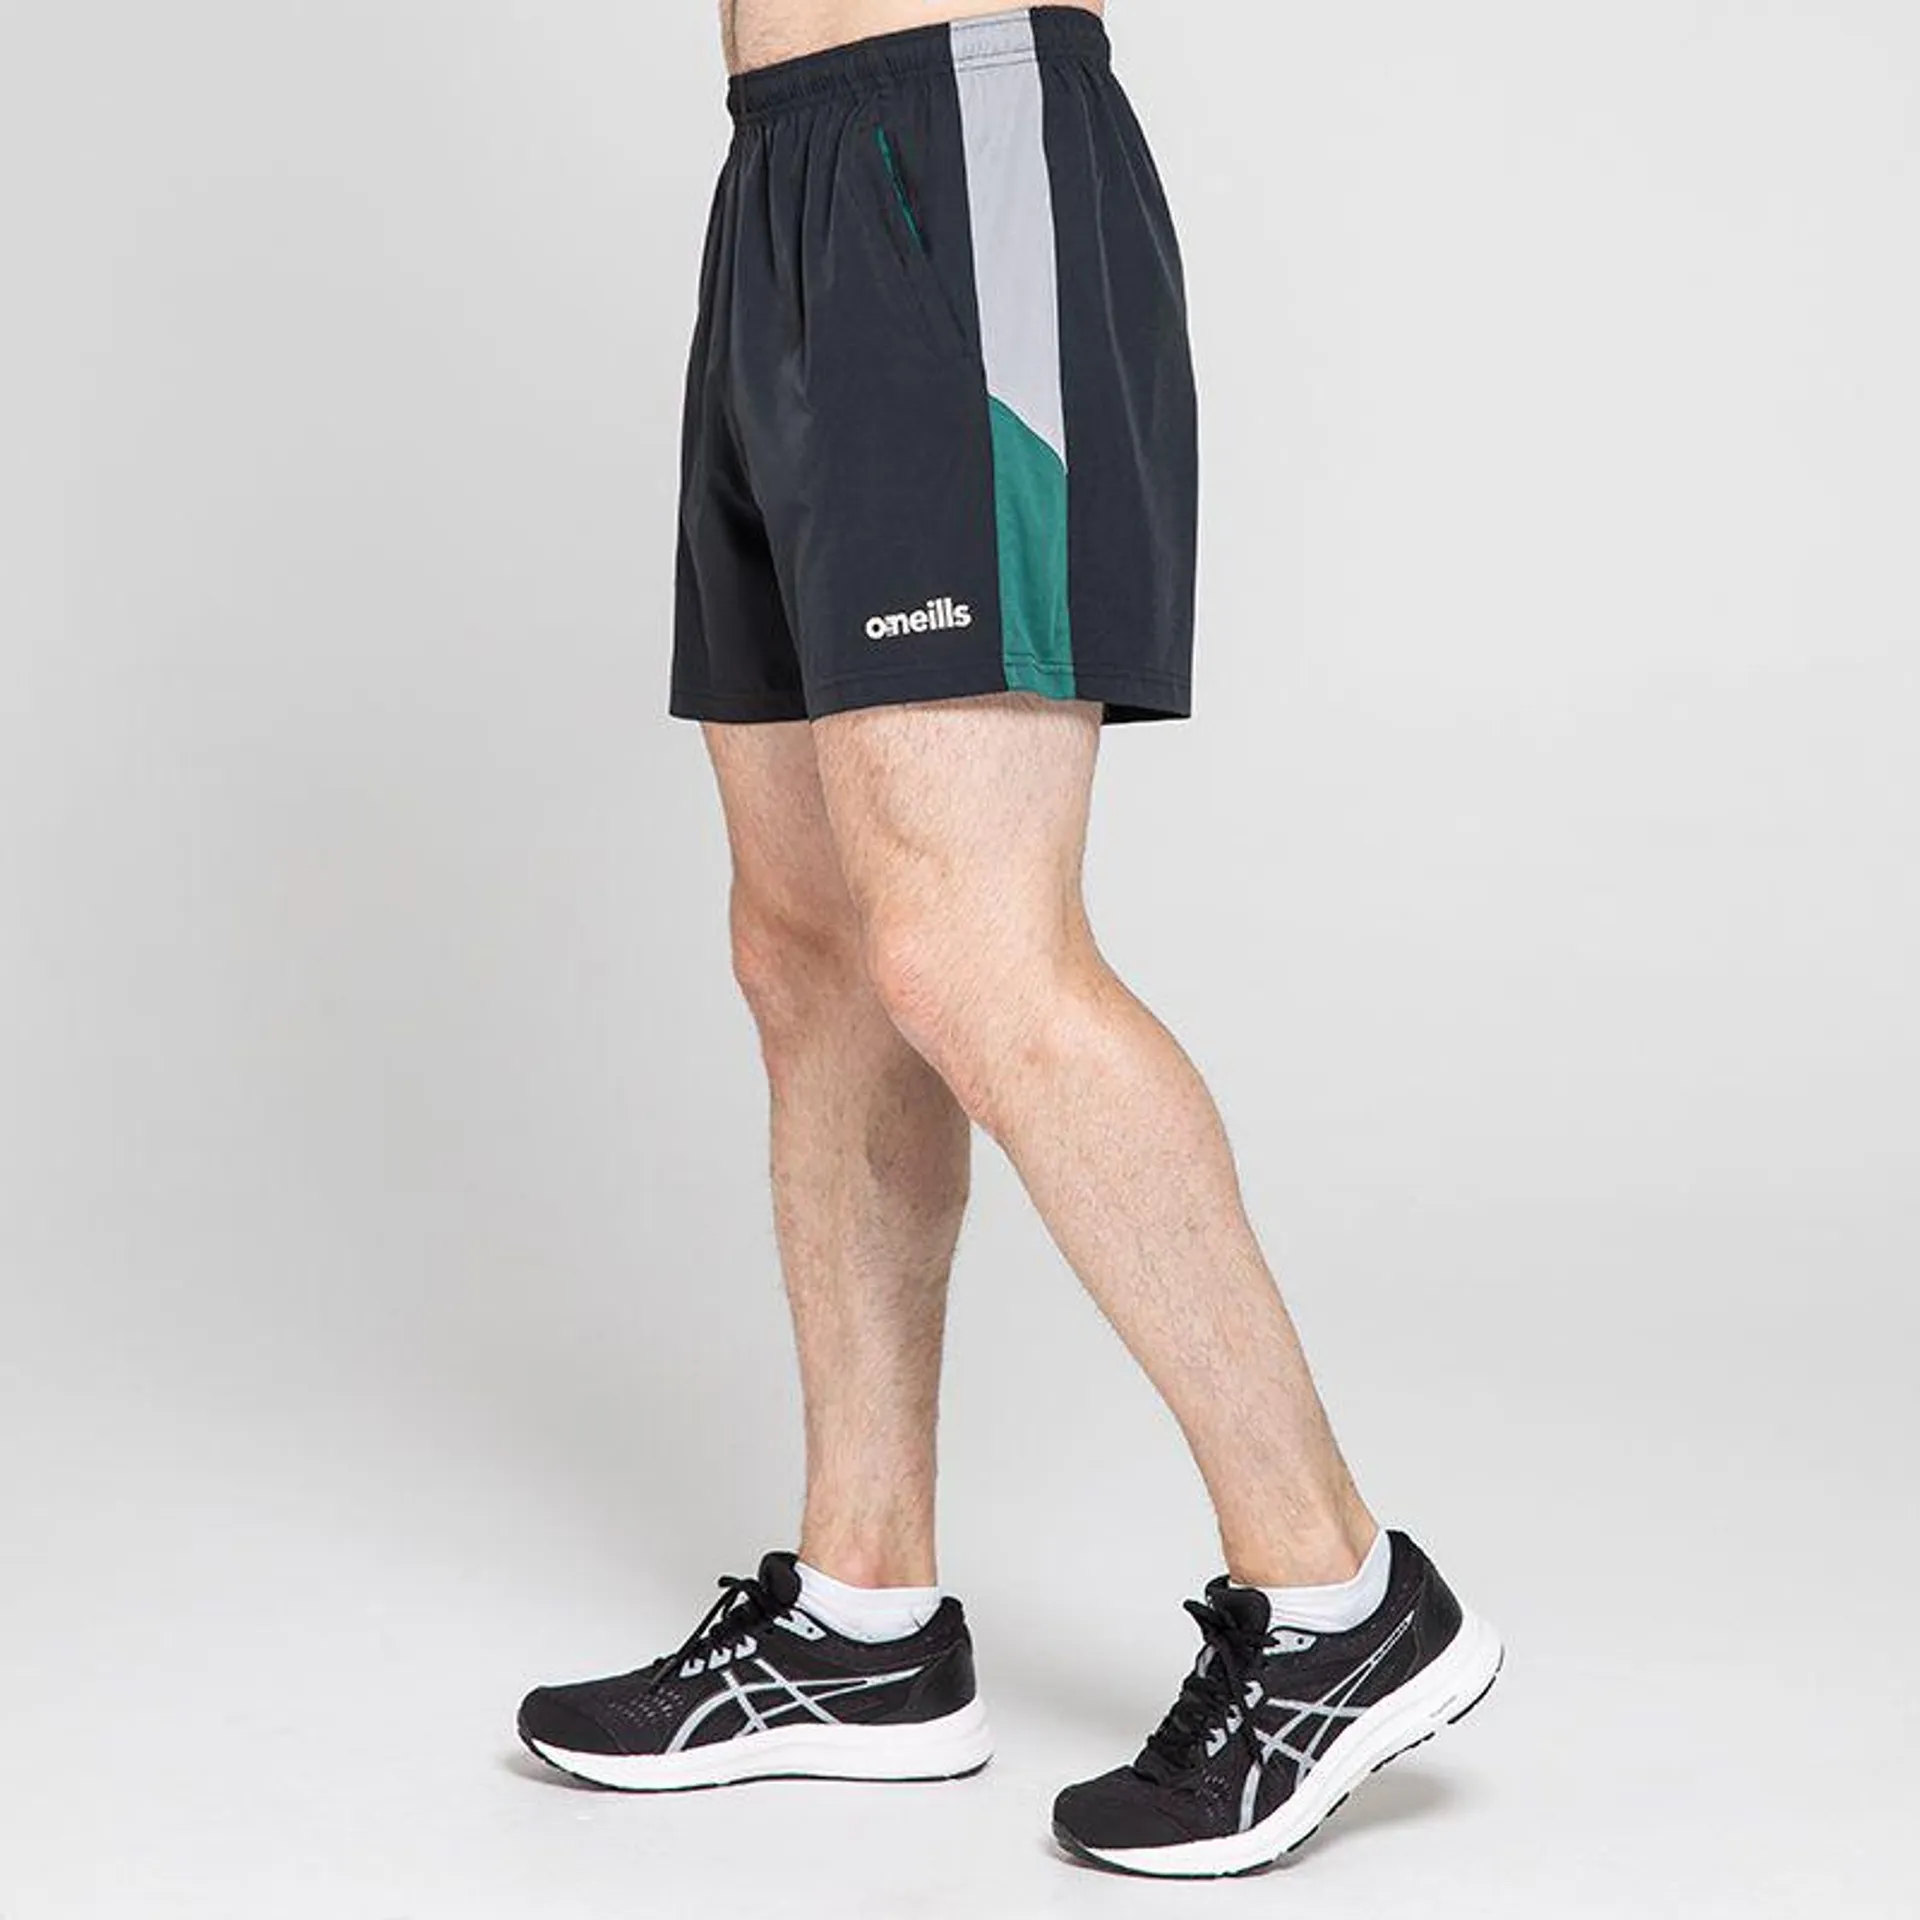 Men's Zack Woven Shorts Black / Grey / Green